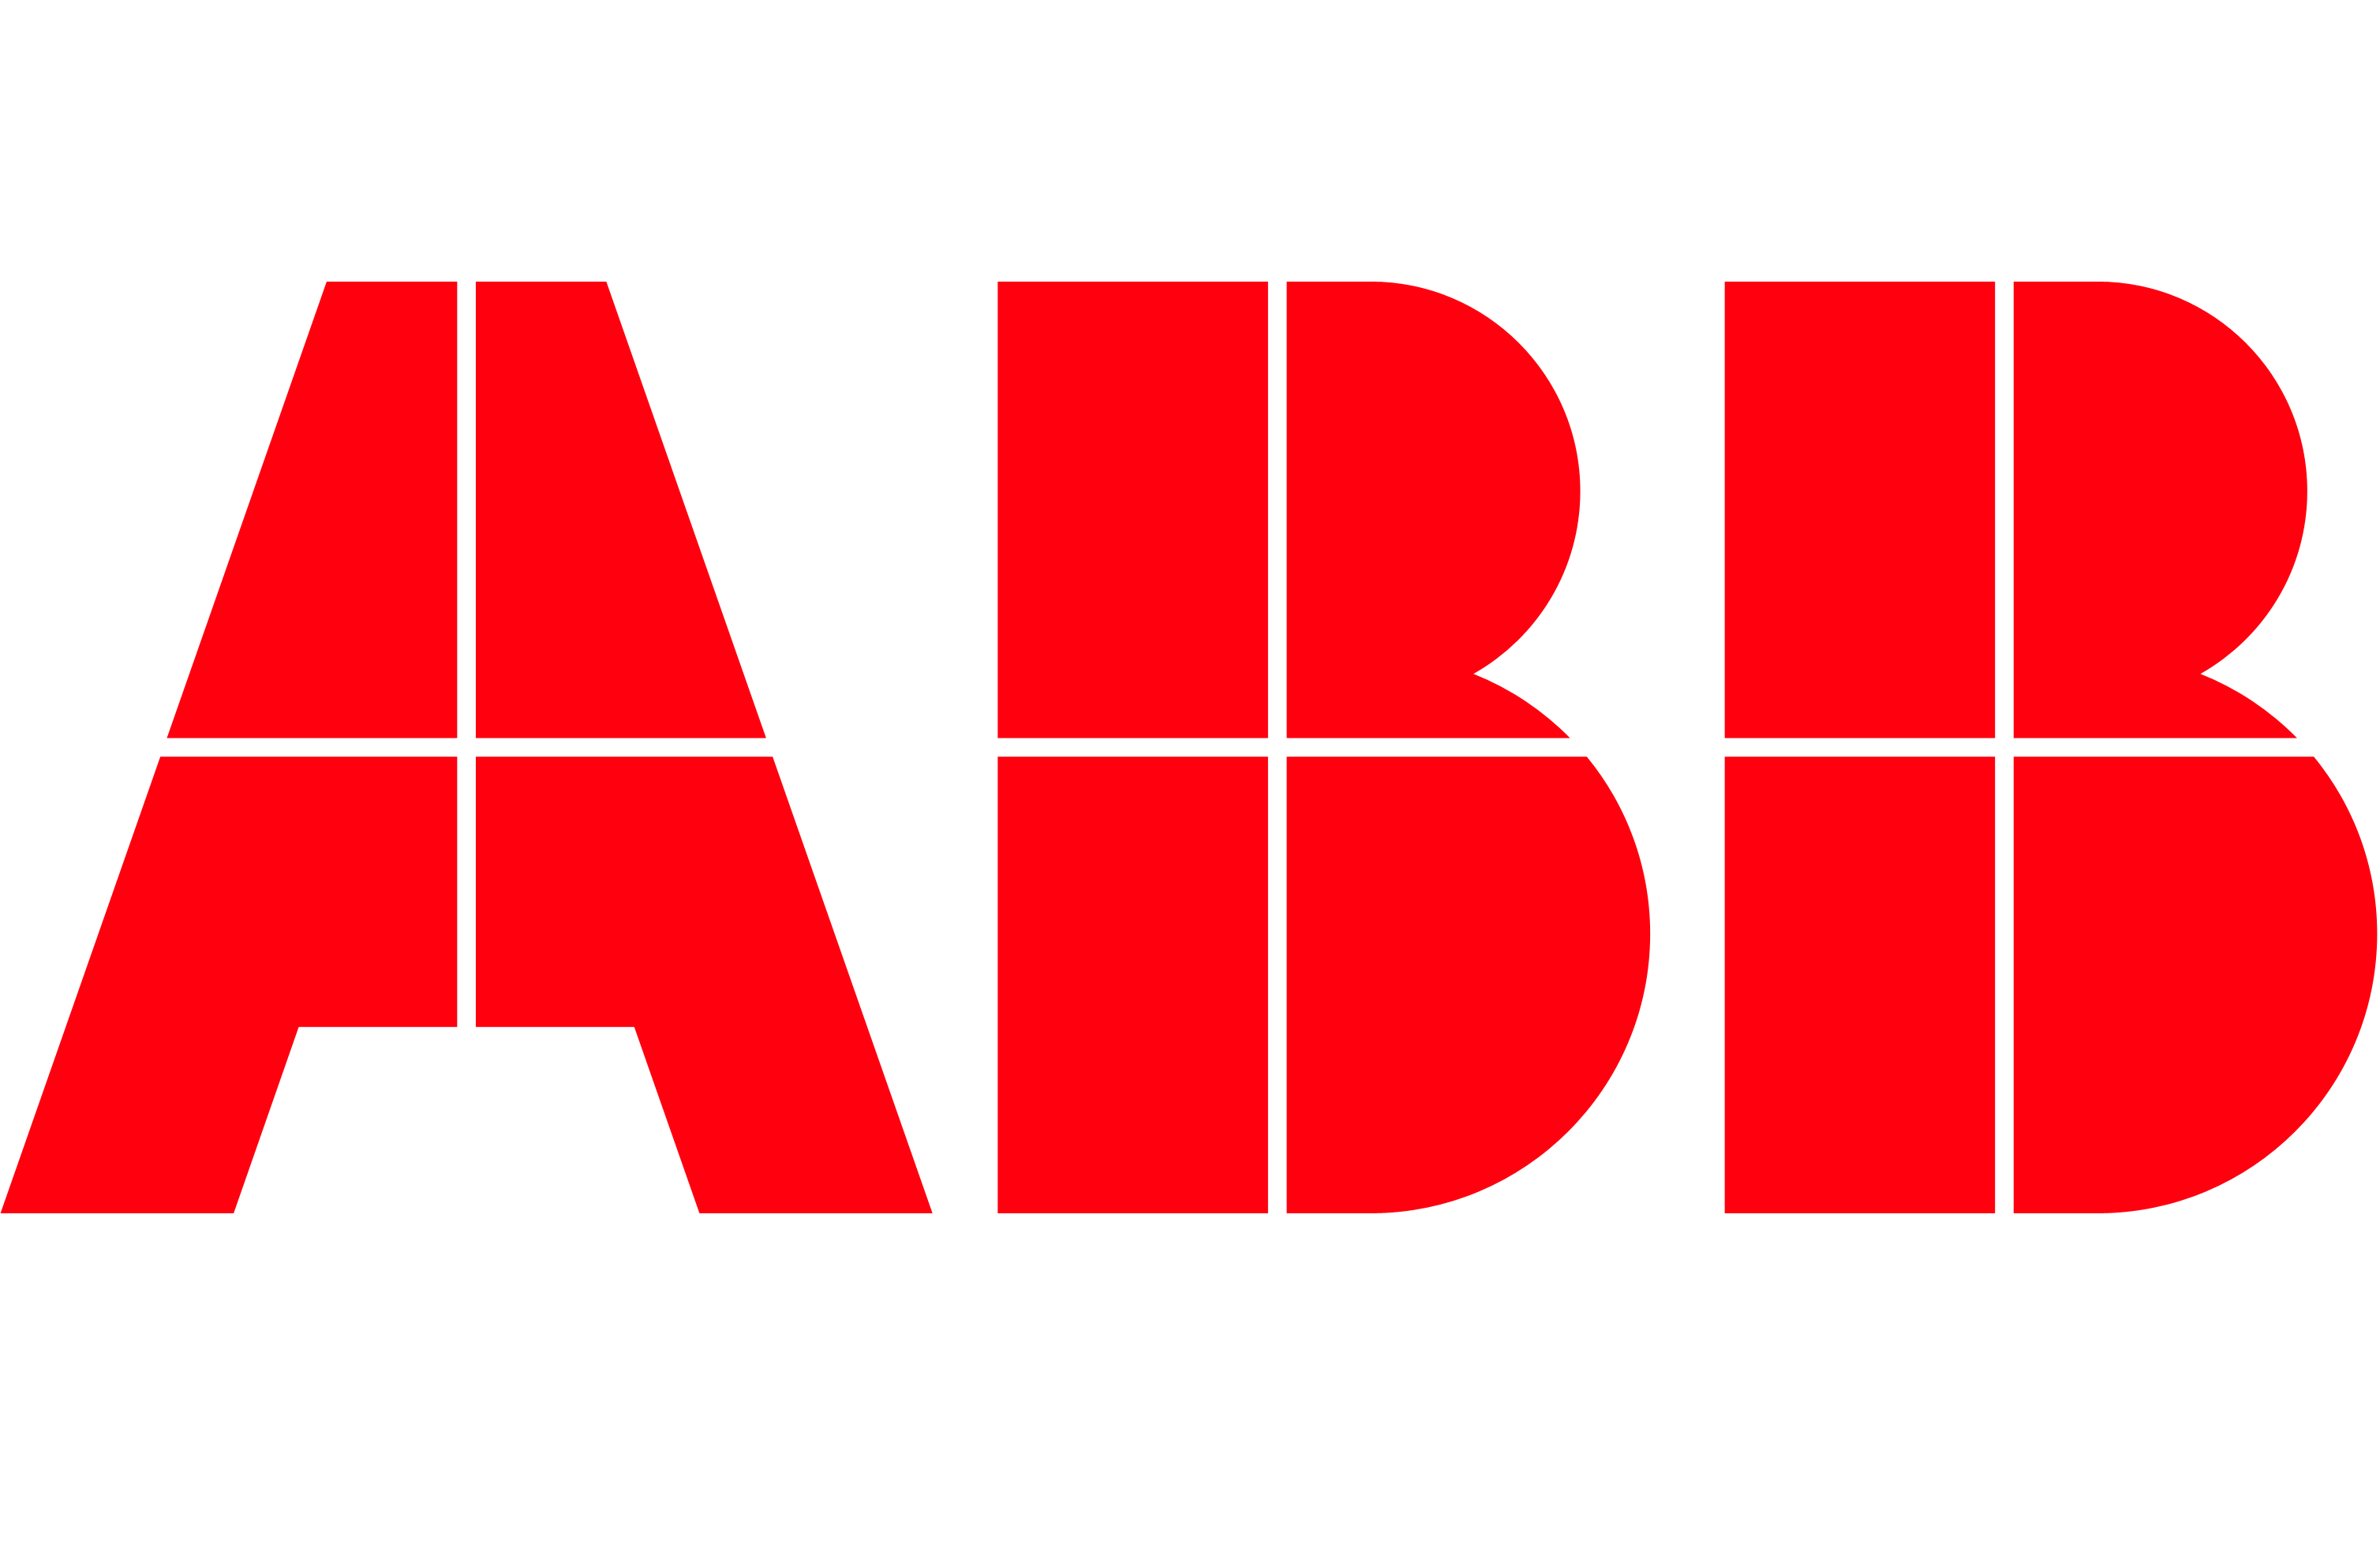 kisspng-logo-abb-peru-abb-group-brand-stredn-priemyseln-5b74333f396383_1548913215343419512351